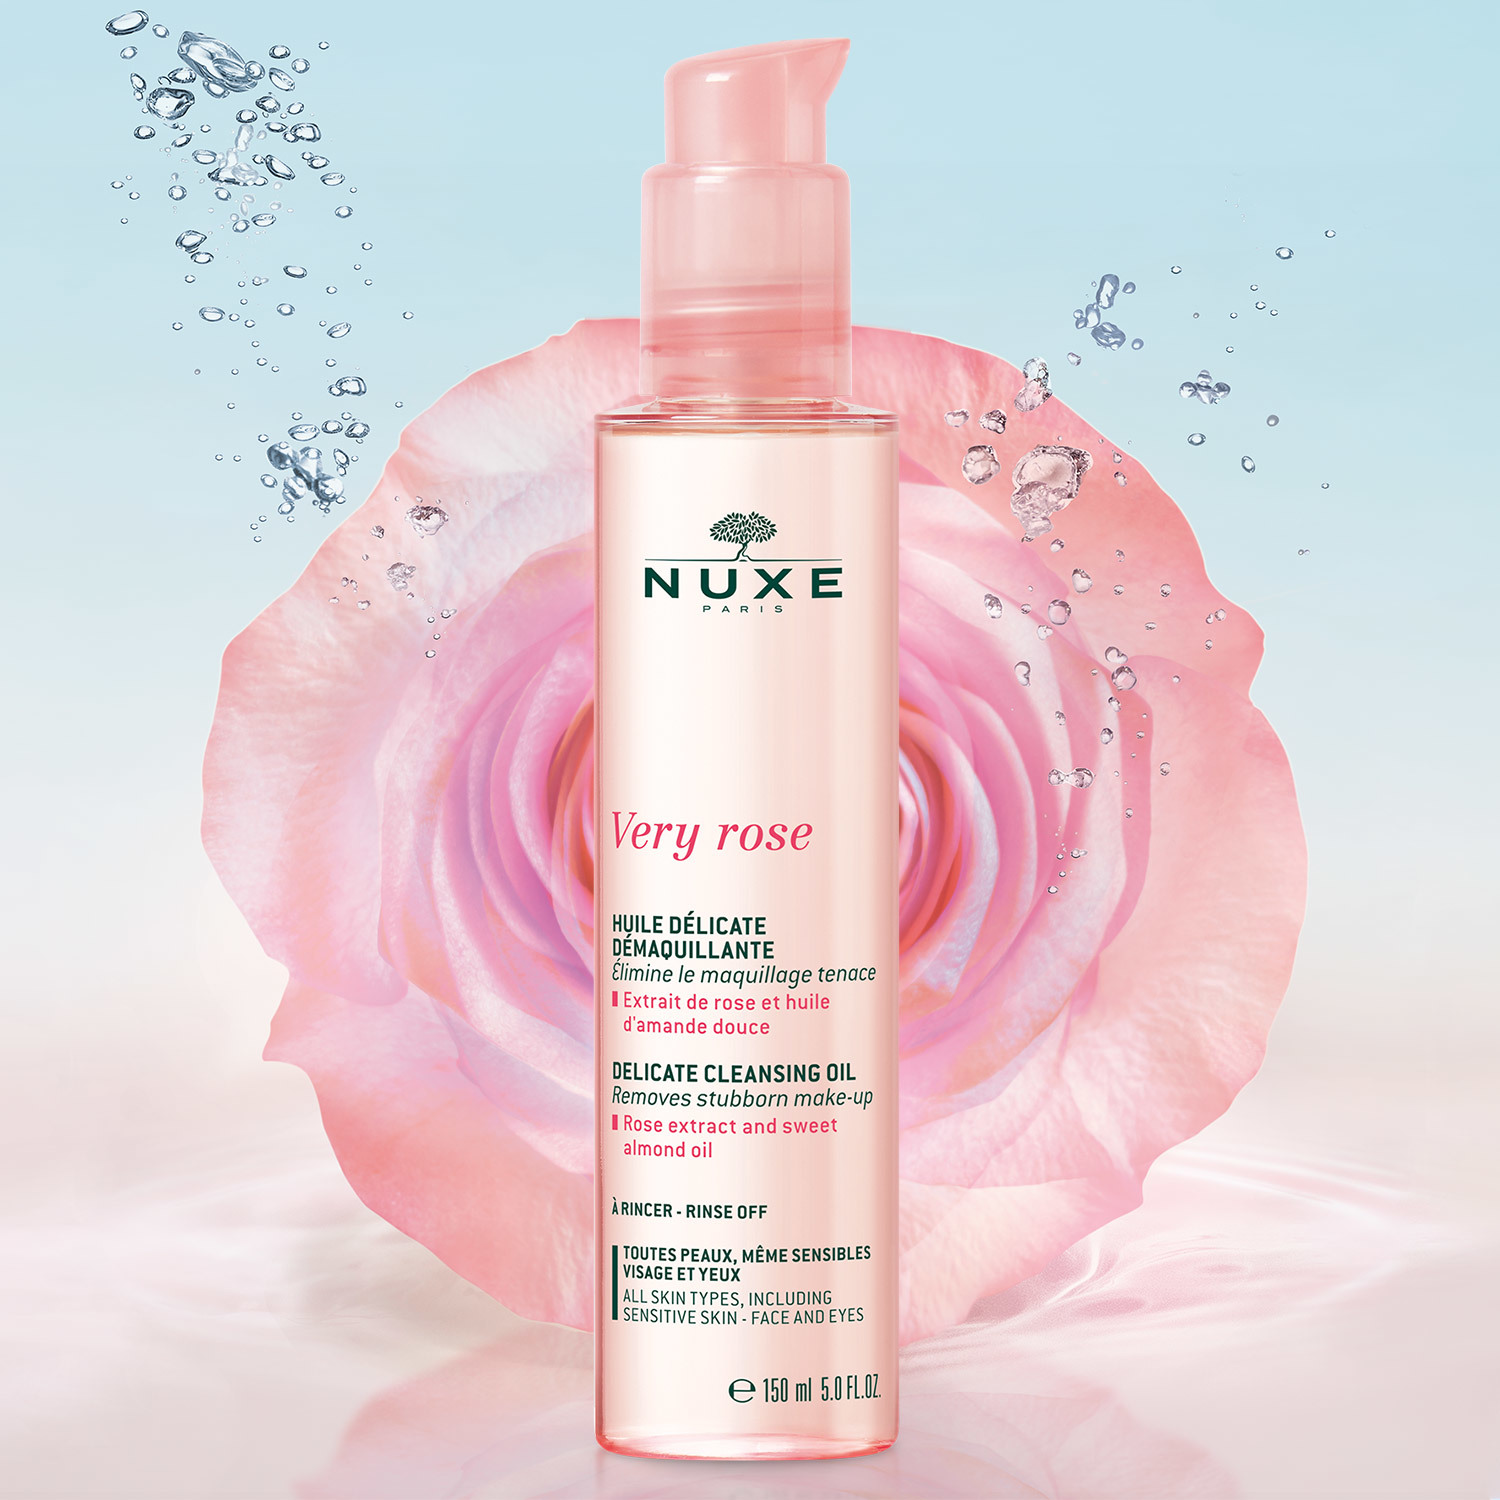 NUXE - Very Rose - Huile Delicate Demaquillante, 150ml